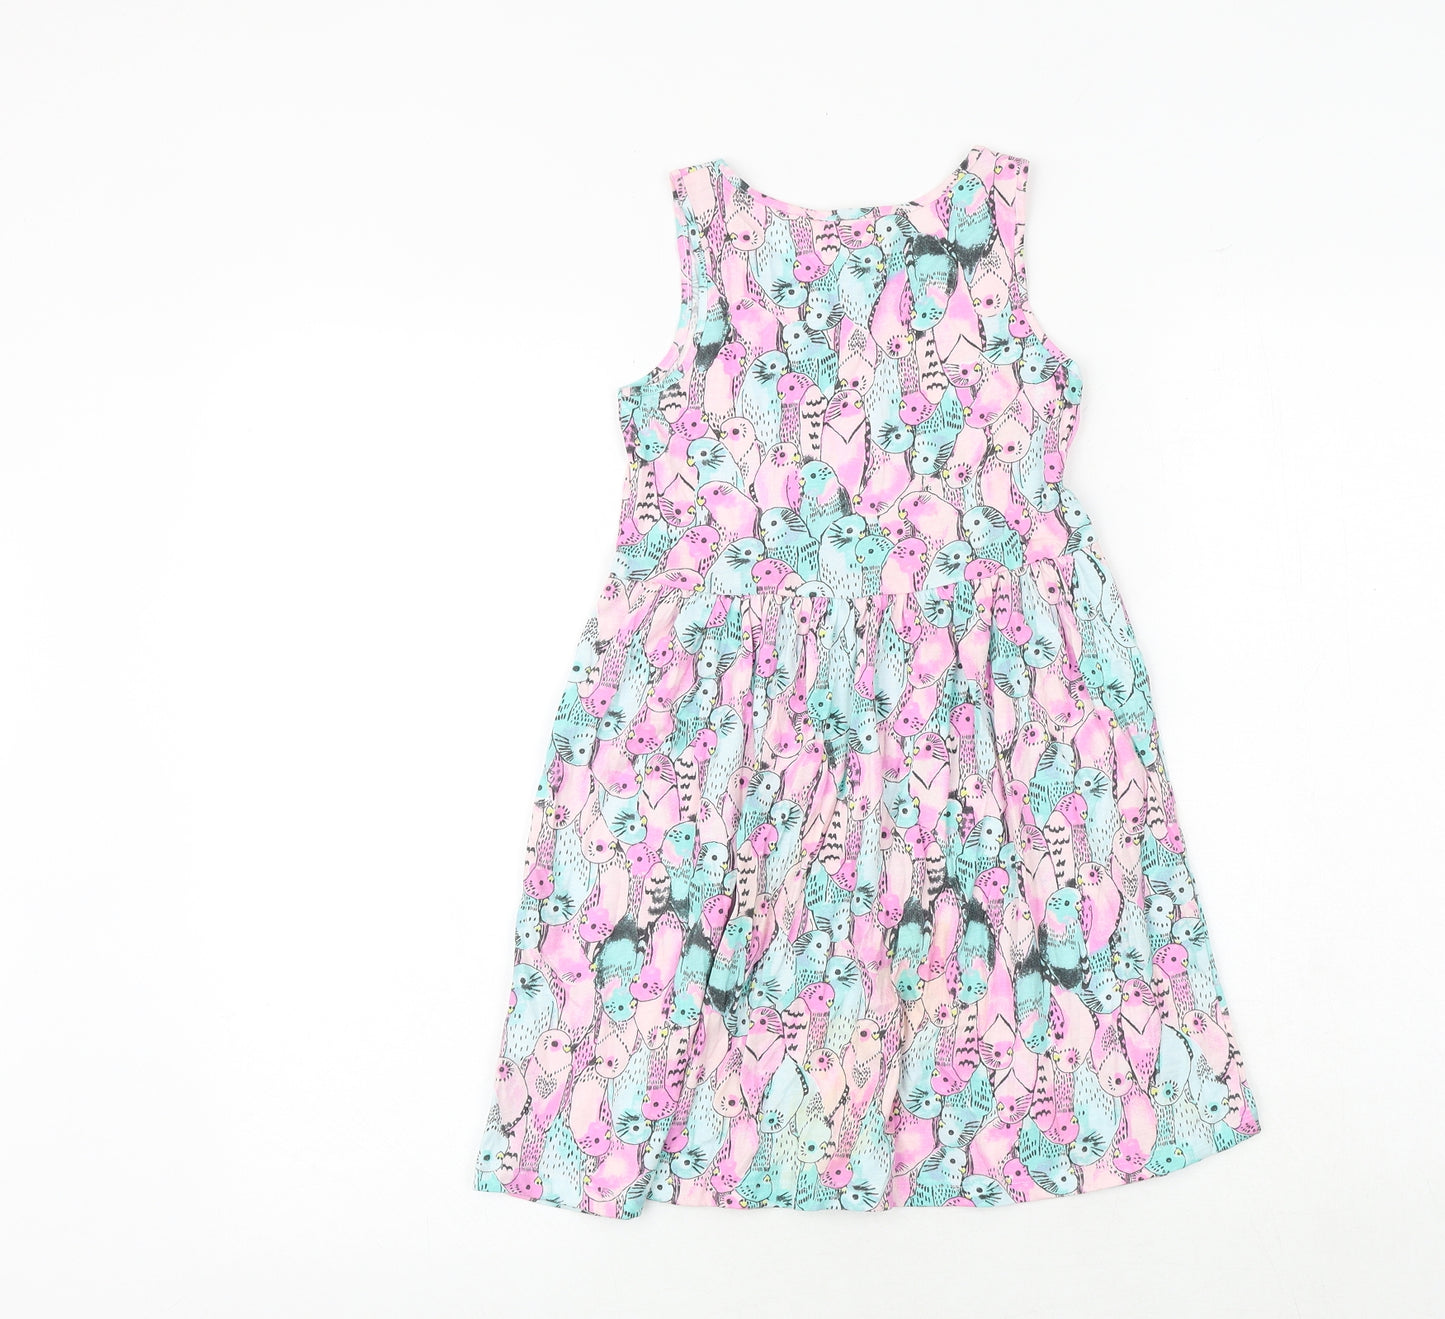 H&M Girls Multicoloured Geometric 100% Cotton Tank Dress Size 7-8 Years Boat Neck Pullover - Bird Print